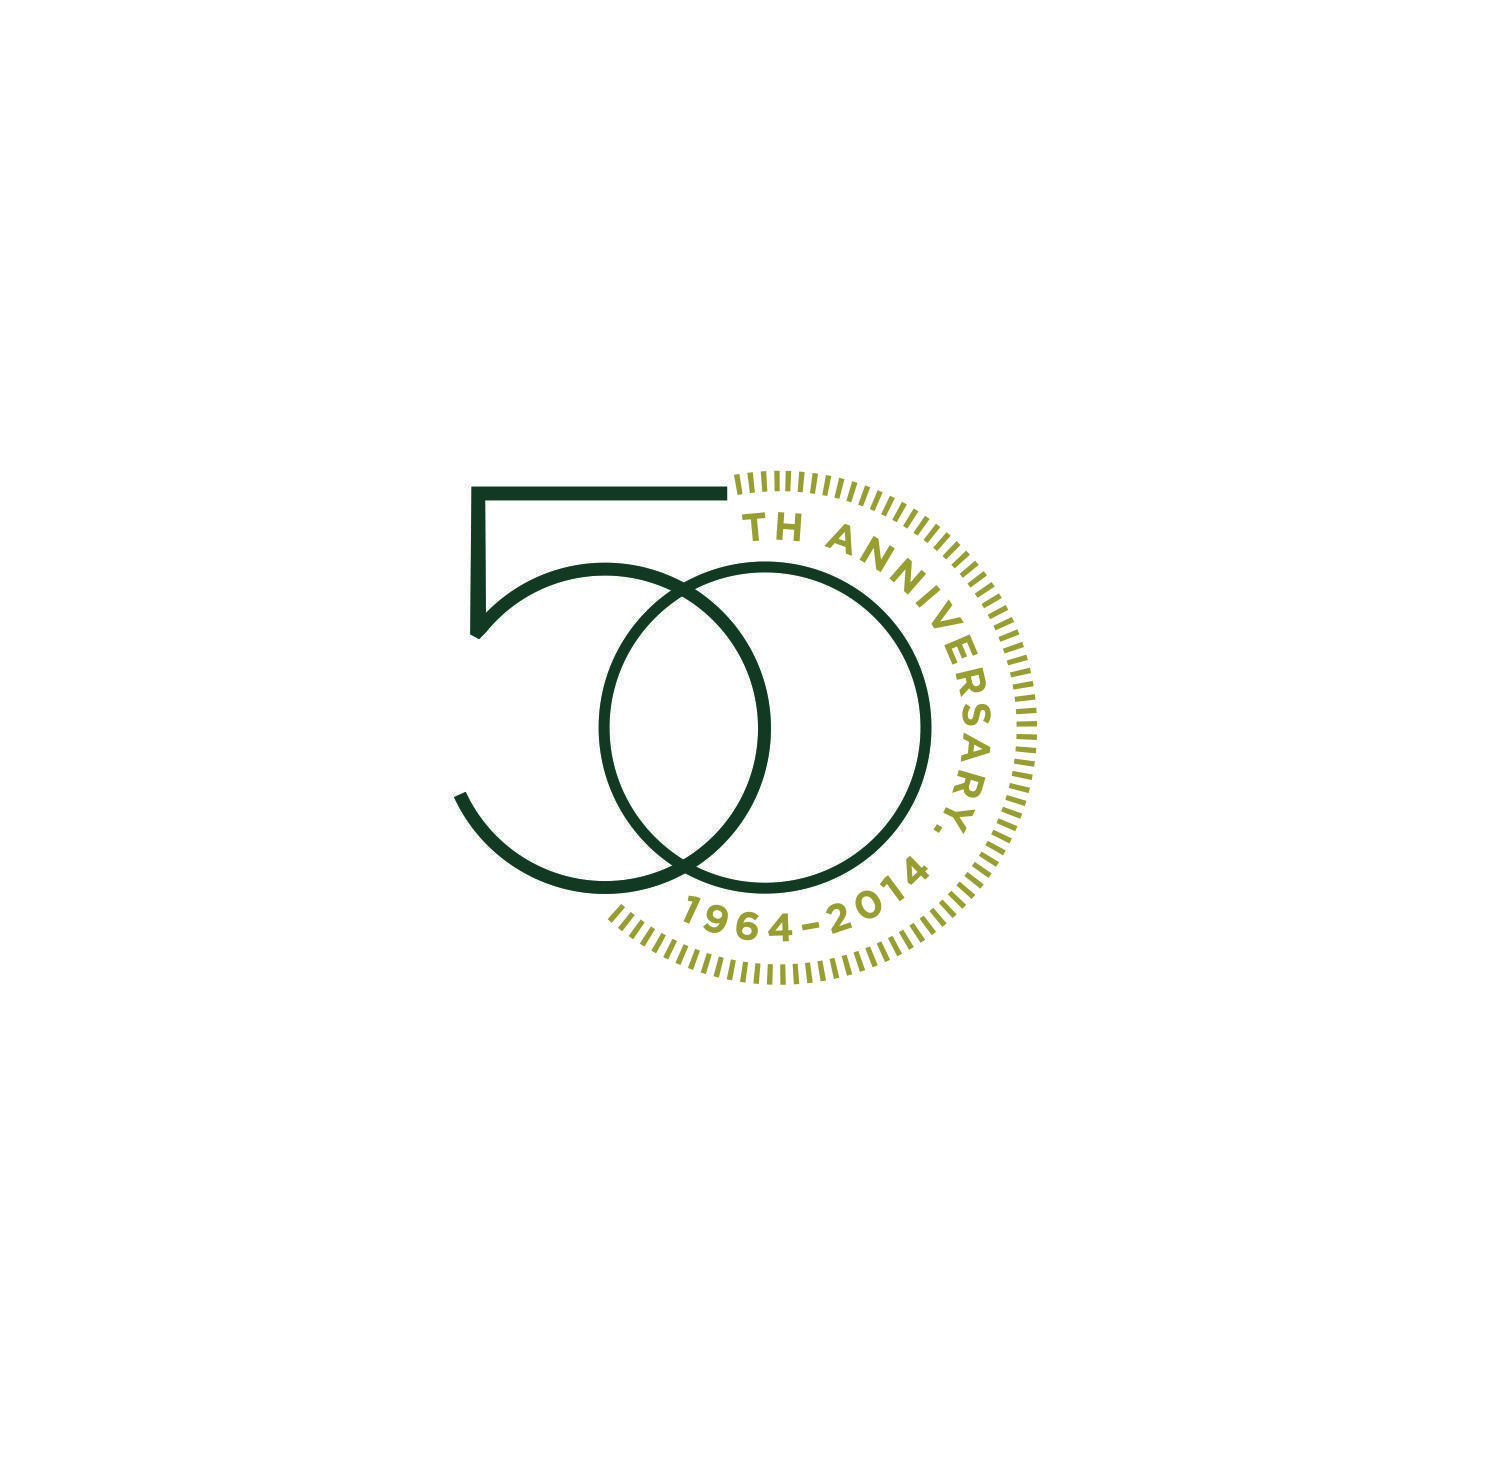 Anniversary Logo - MSU College of Human Medicine 50th Anniversary logo created by Extra ...